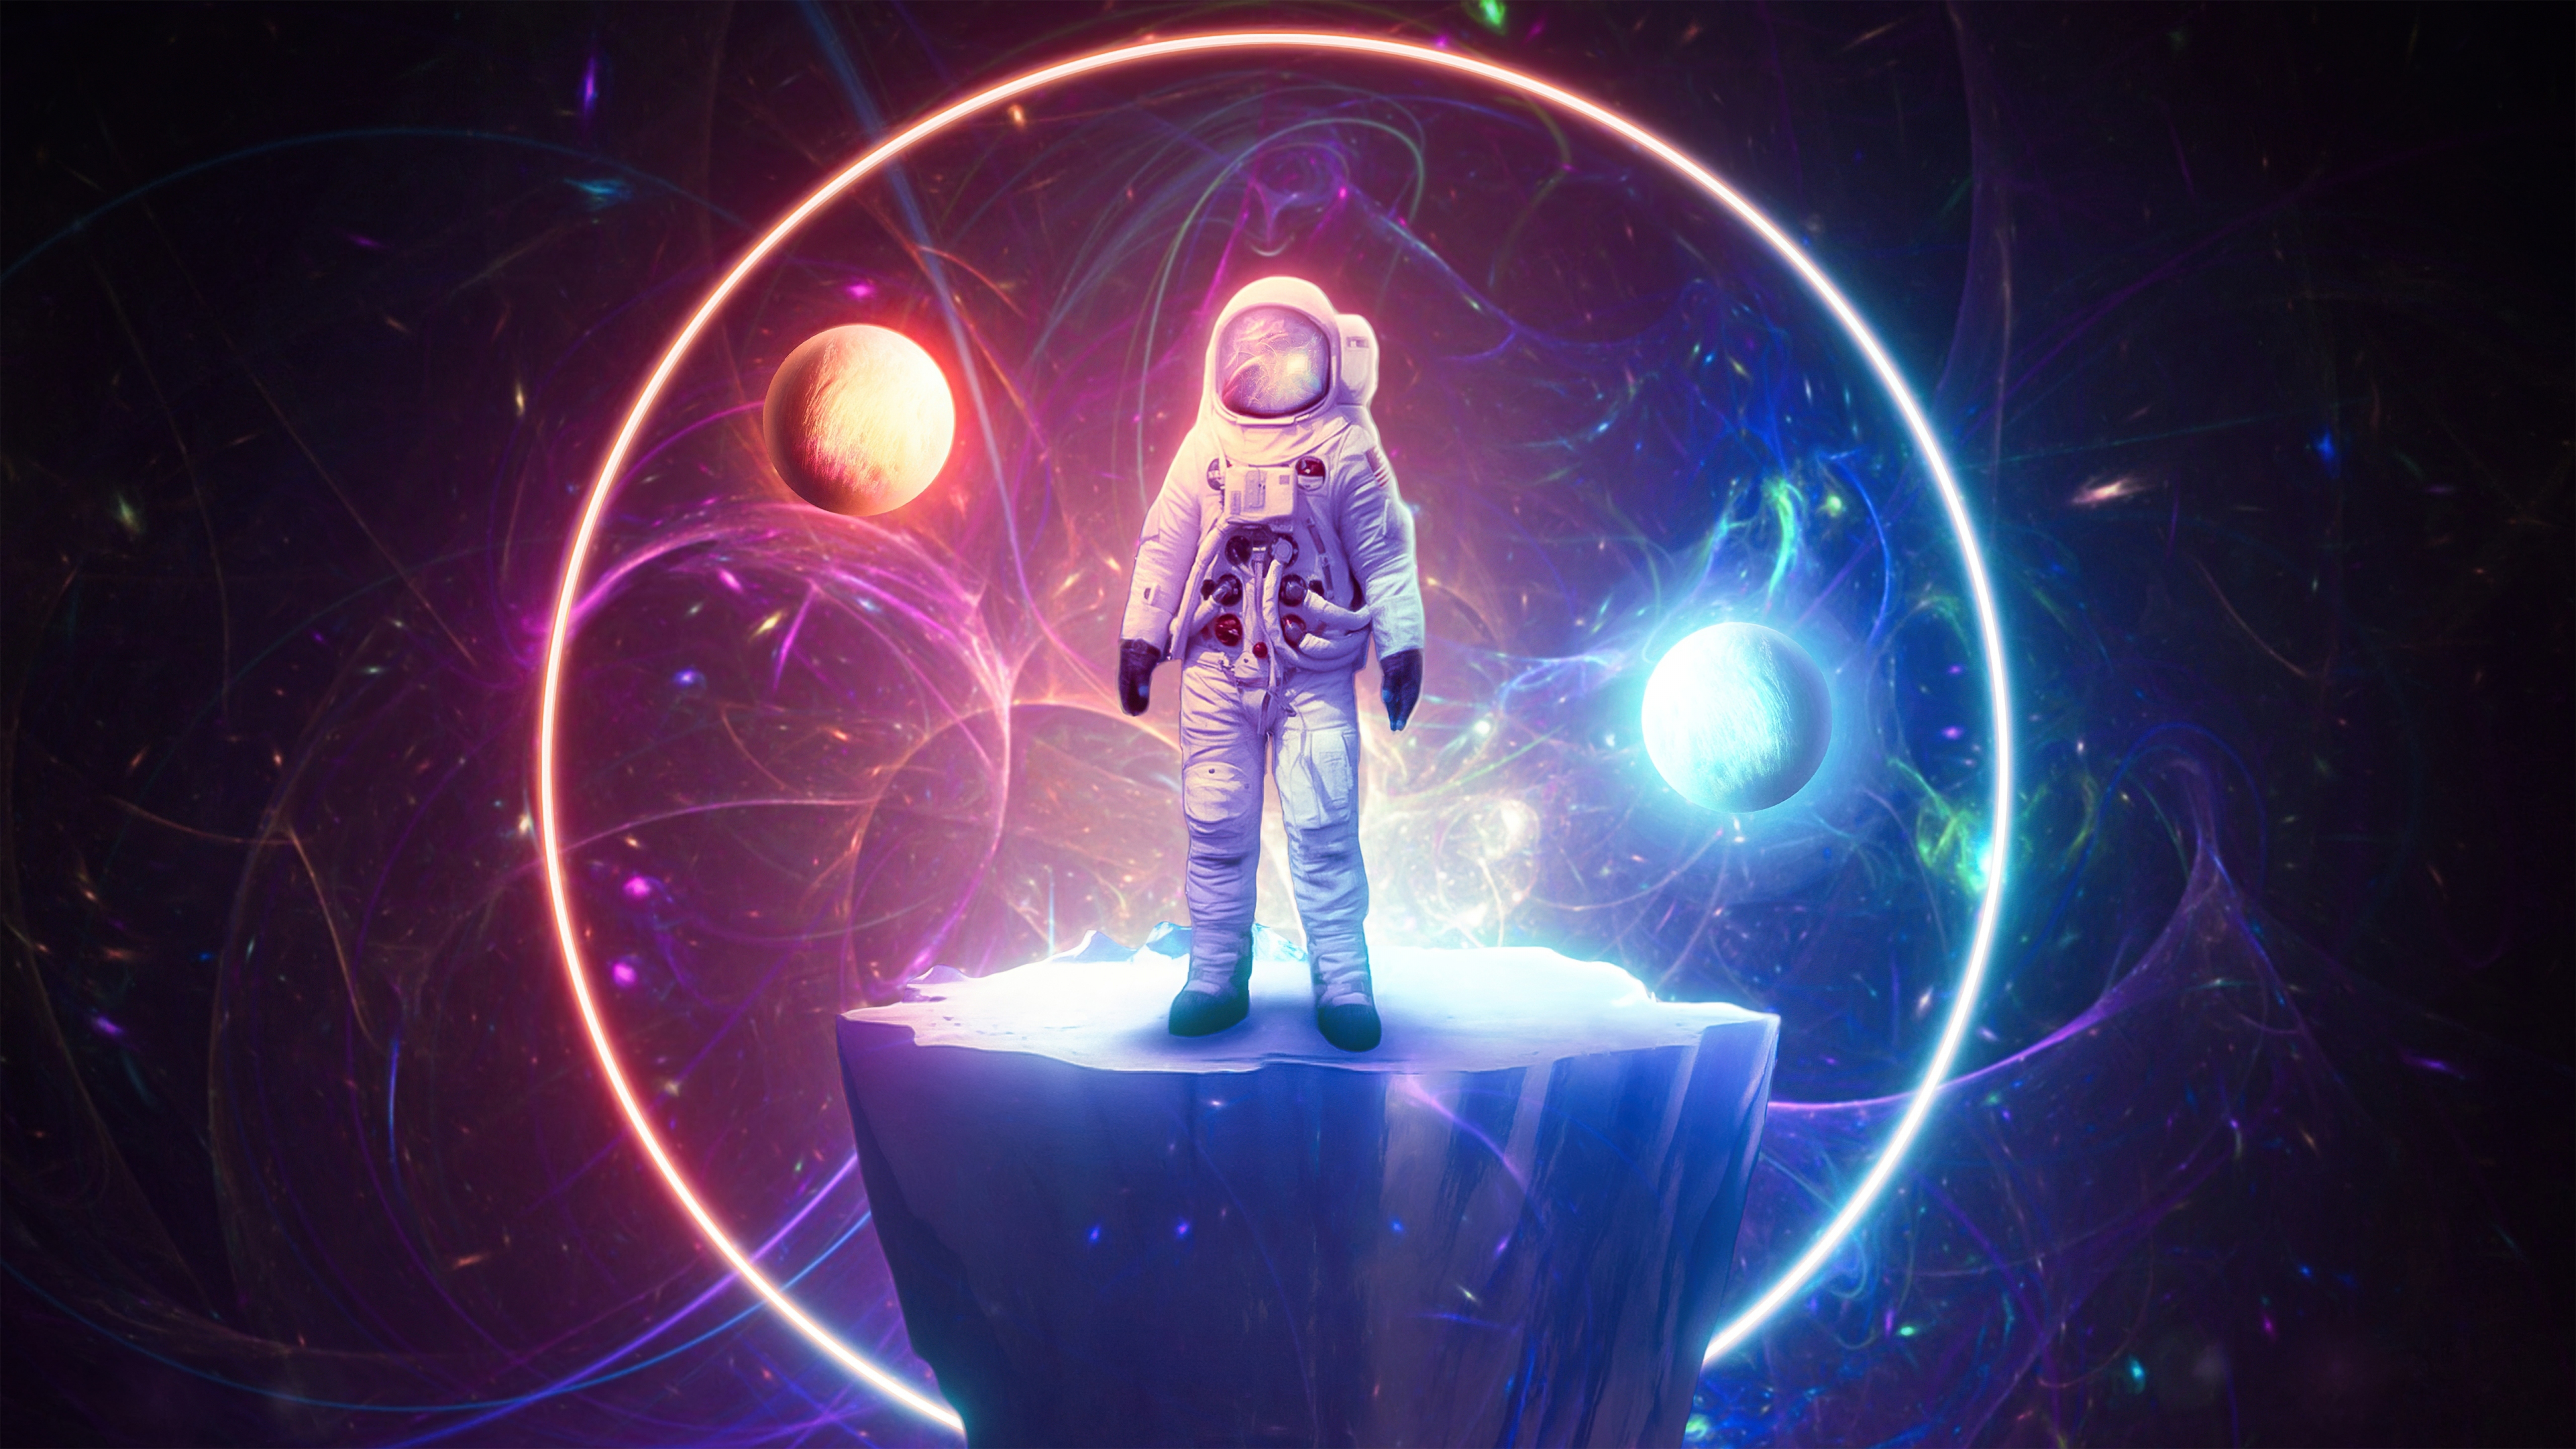 Sci Fi Astronaut 4k Ultra HD Wallpaper by mohamedsaberartist